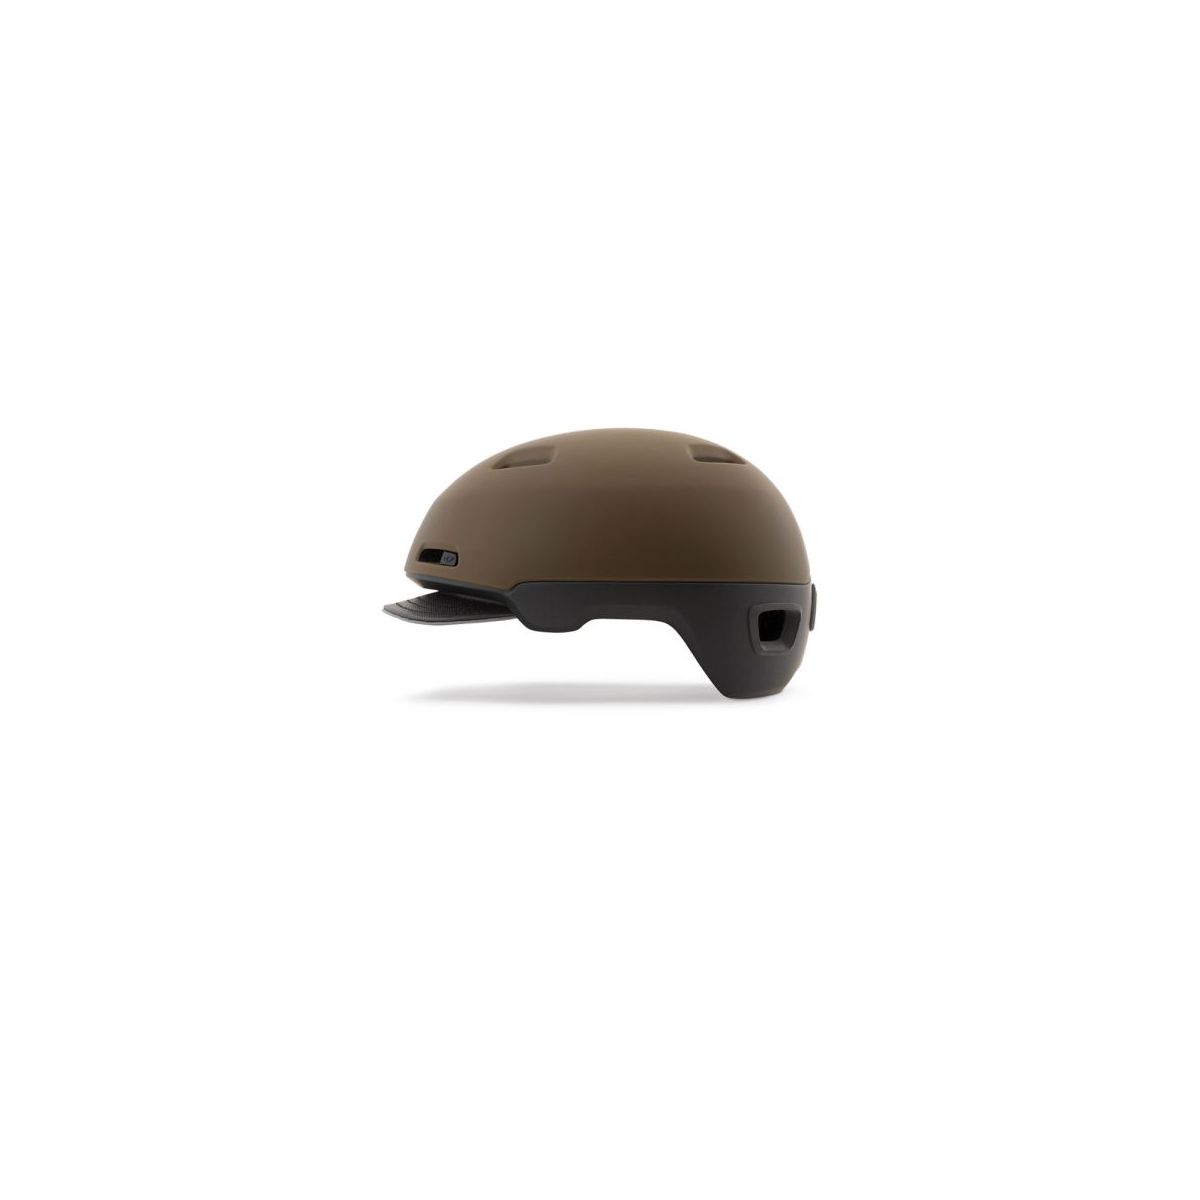 Casco Giro Sutton de ciudad talla M 55-59cm - OUTLET - color walnut marrón